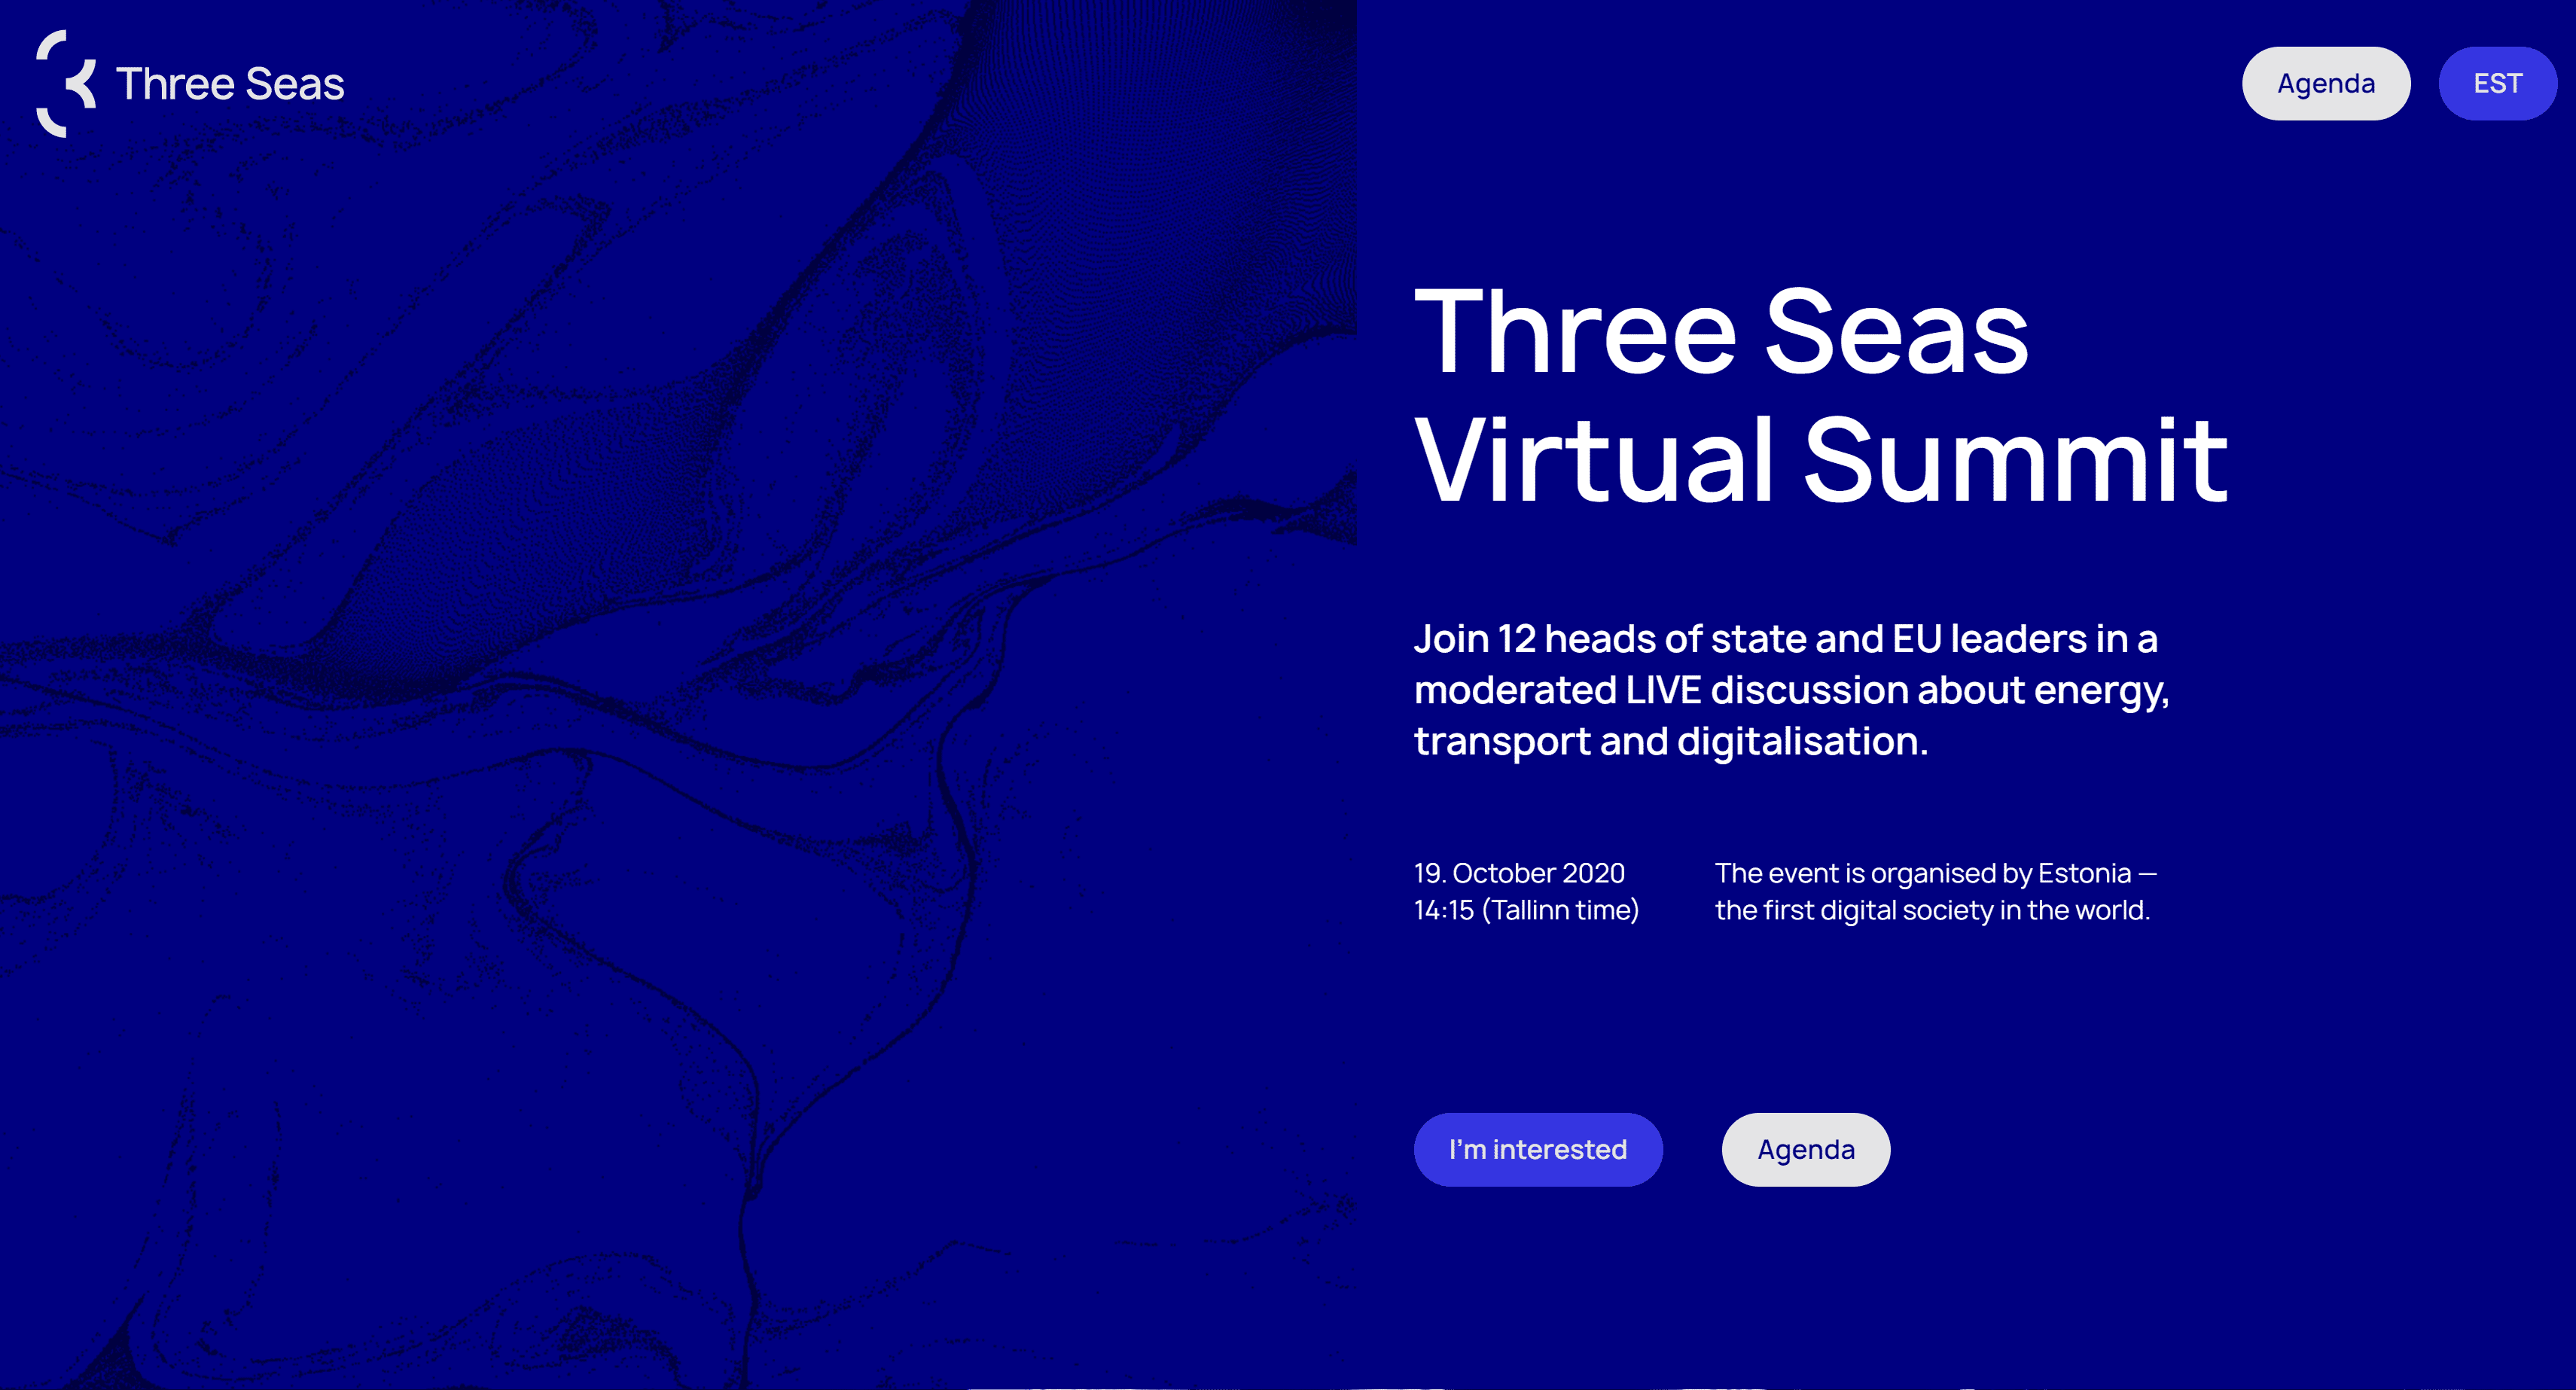 The Three Seas Virtual Summit And Web Forum Eanc Erku